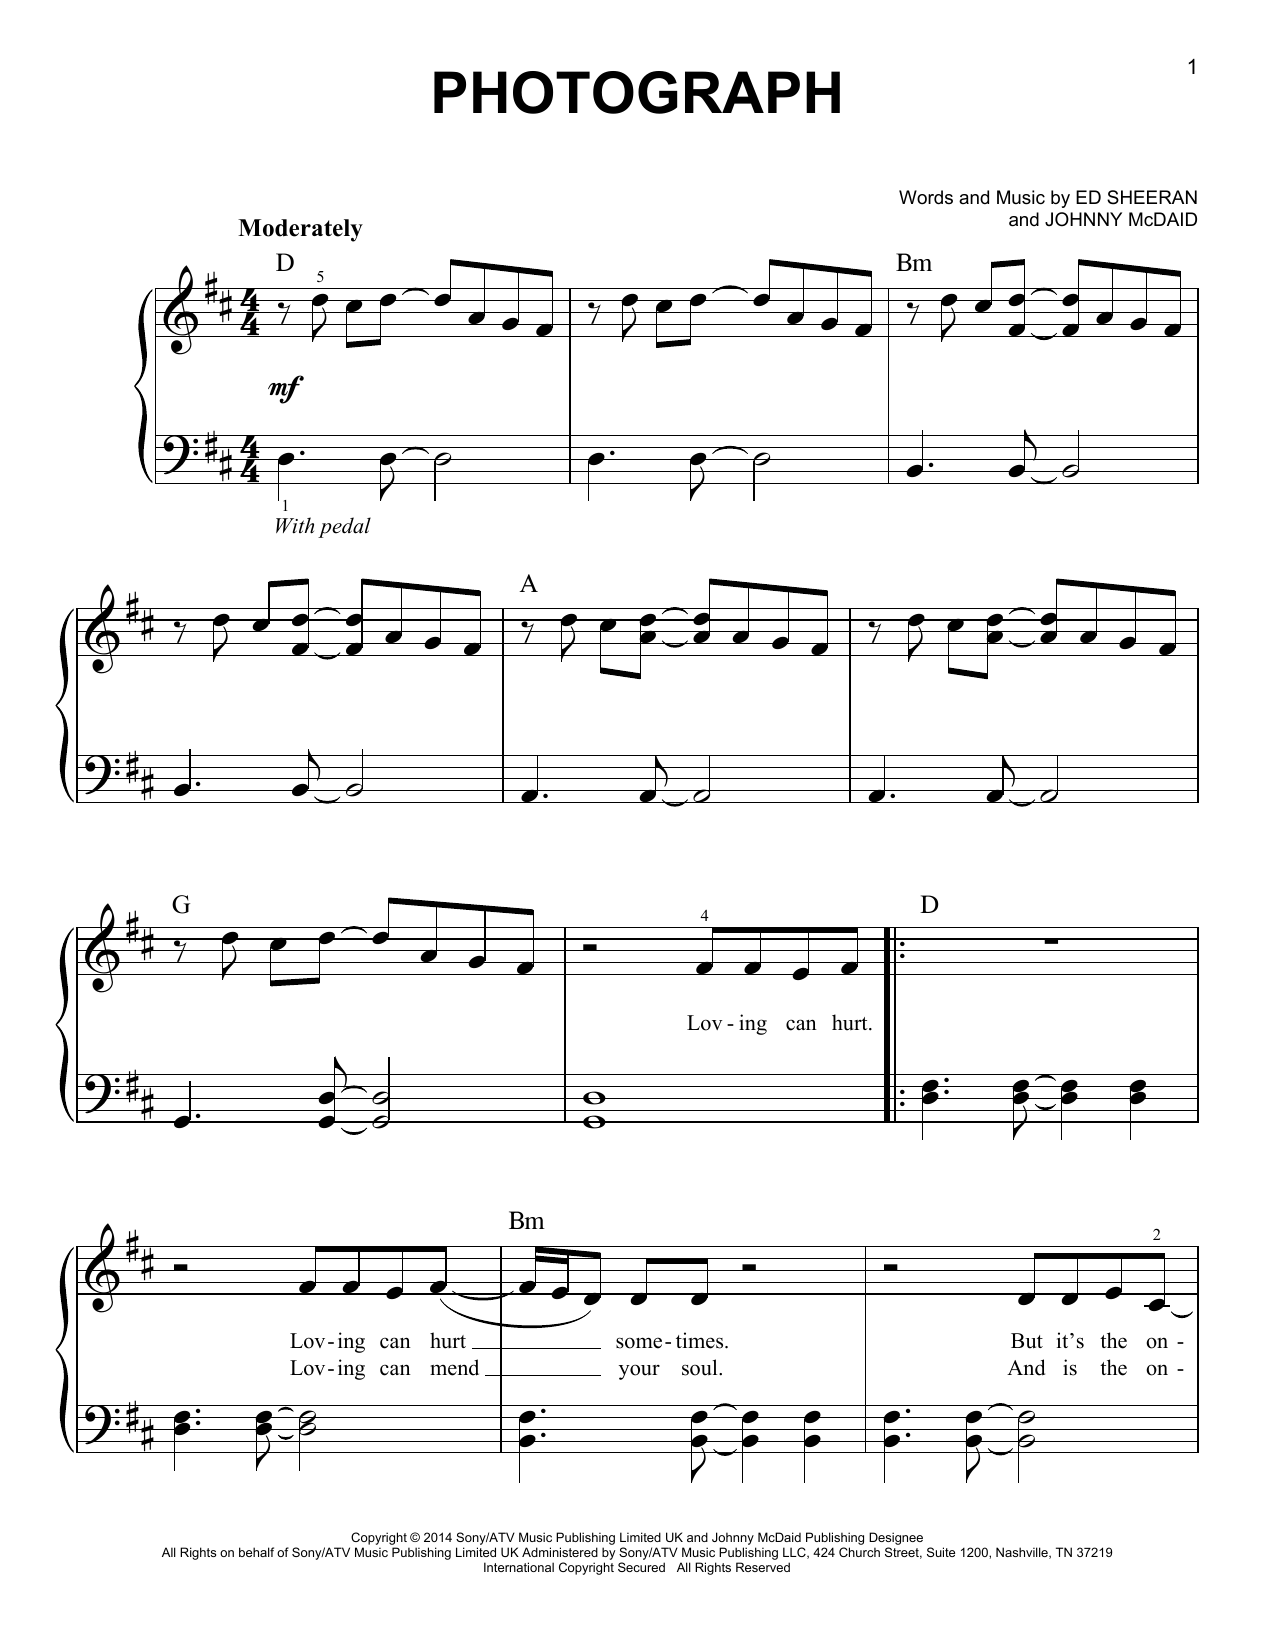 Ed Sheeran "Photograph" Sheet Music PDF Notes, Chords | Pop Score Easy